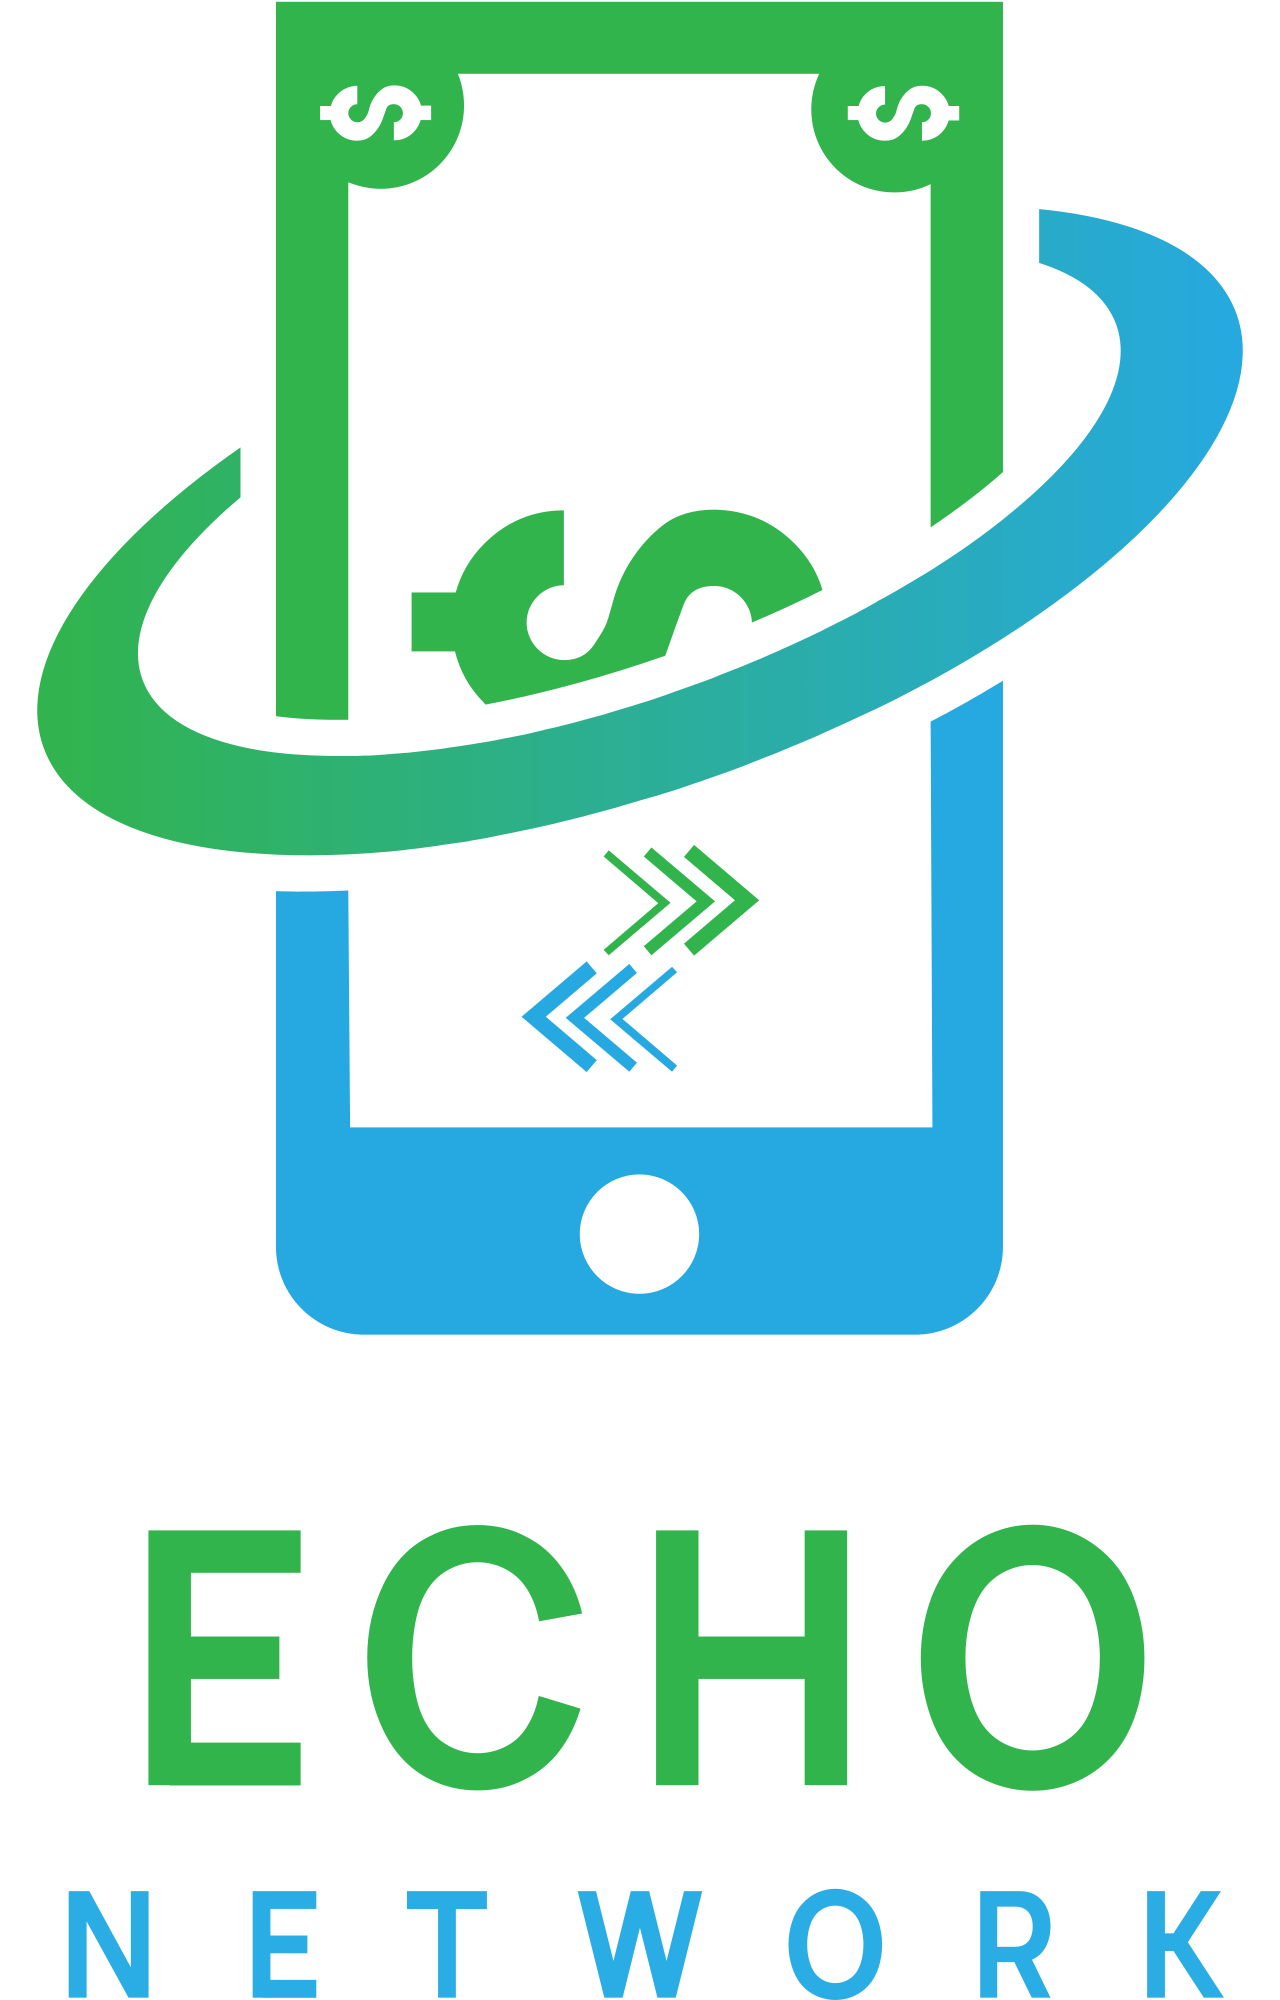 ECHO's logo